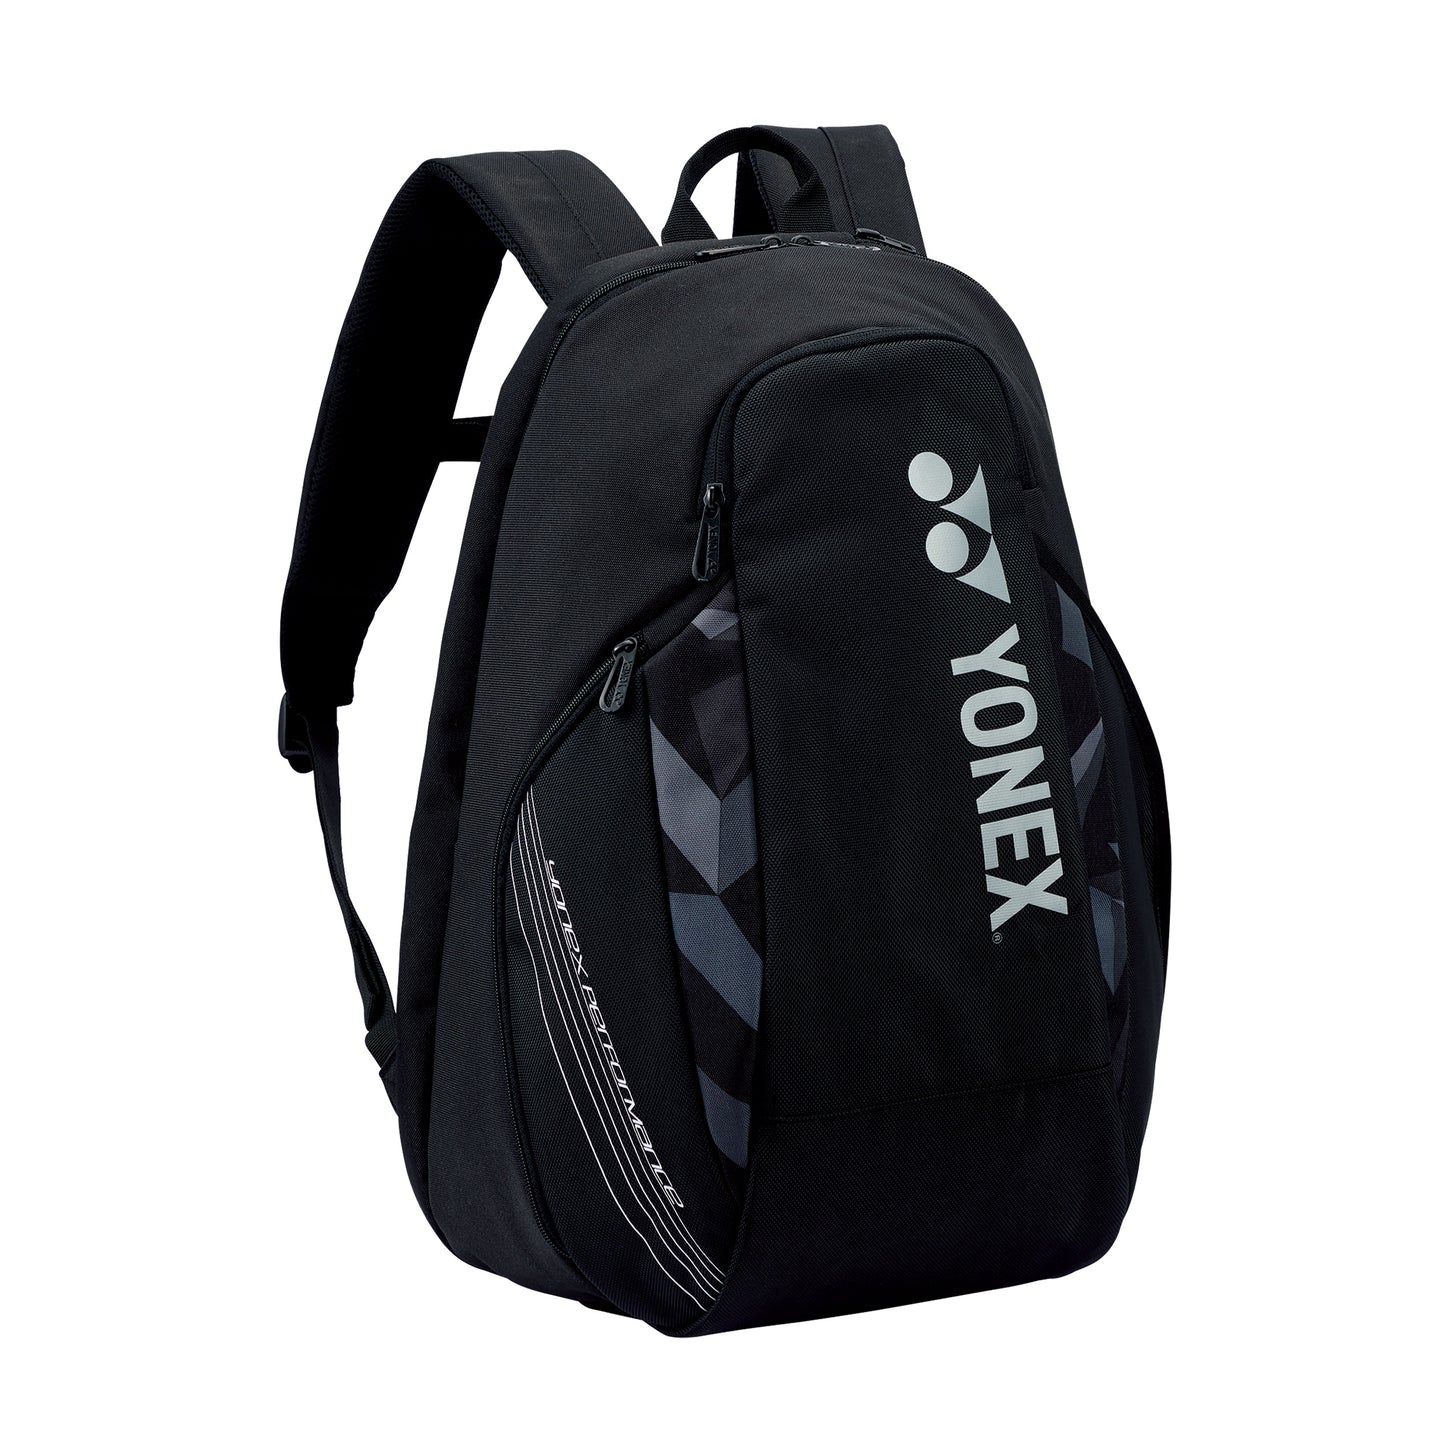 Yonex Pro Series Black backpack tennis badminton bag